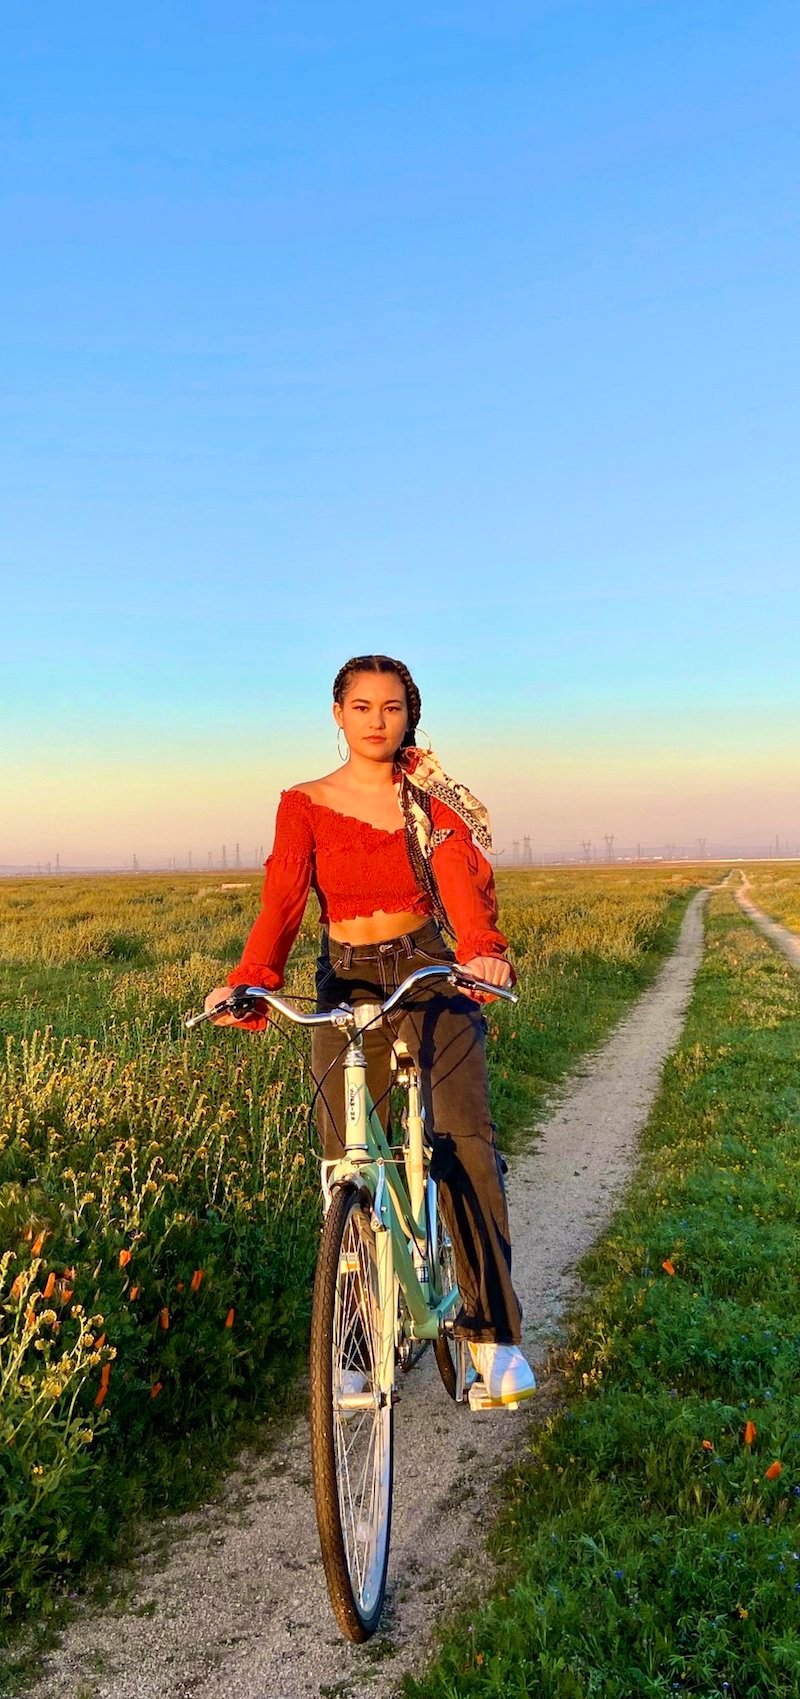 Naomicheyanne riding a pedal bike in an open field. 